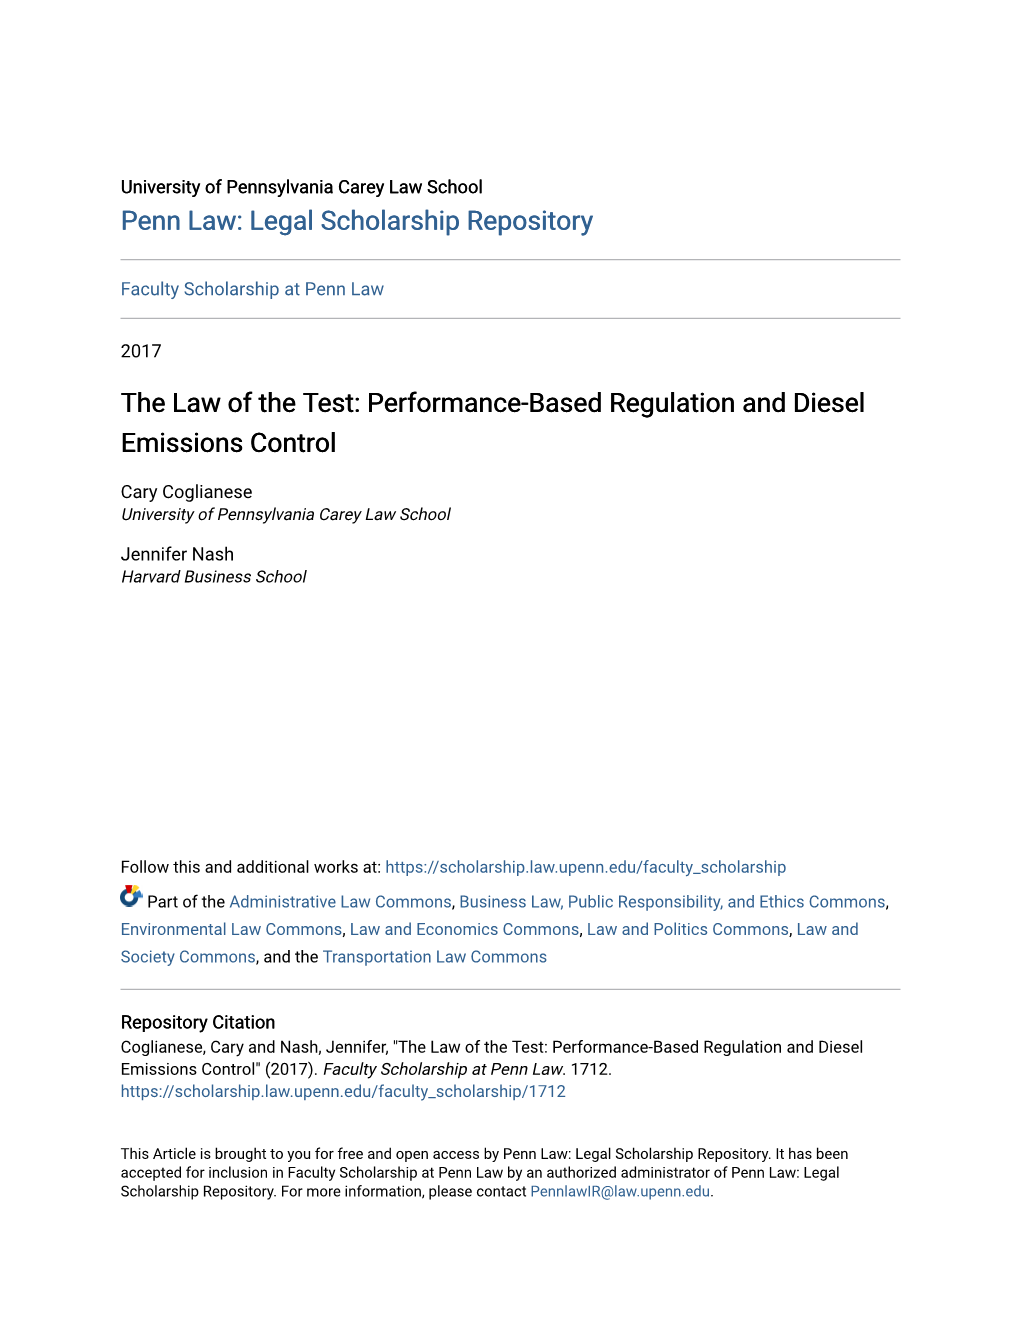 Performance-Based Regulation and Diesel Emissions Control